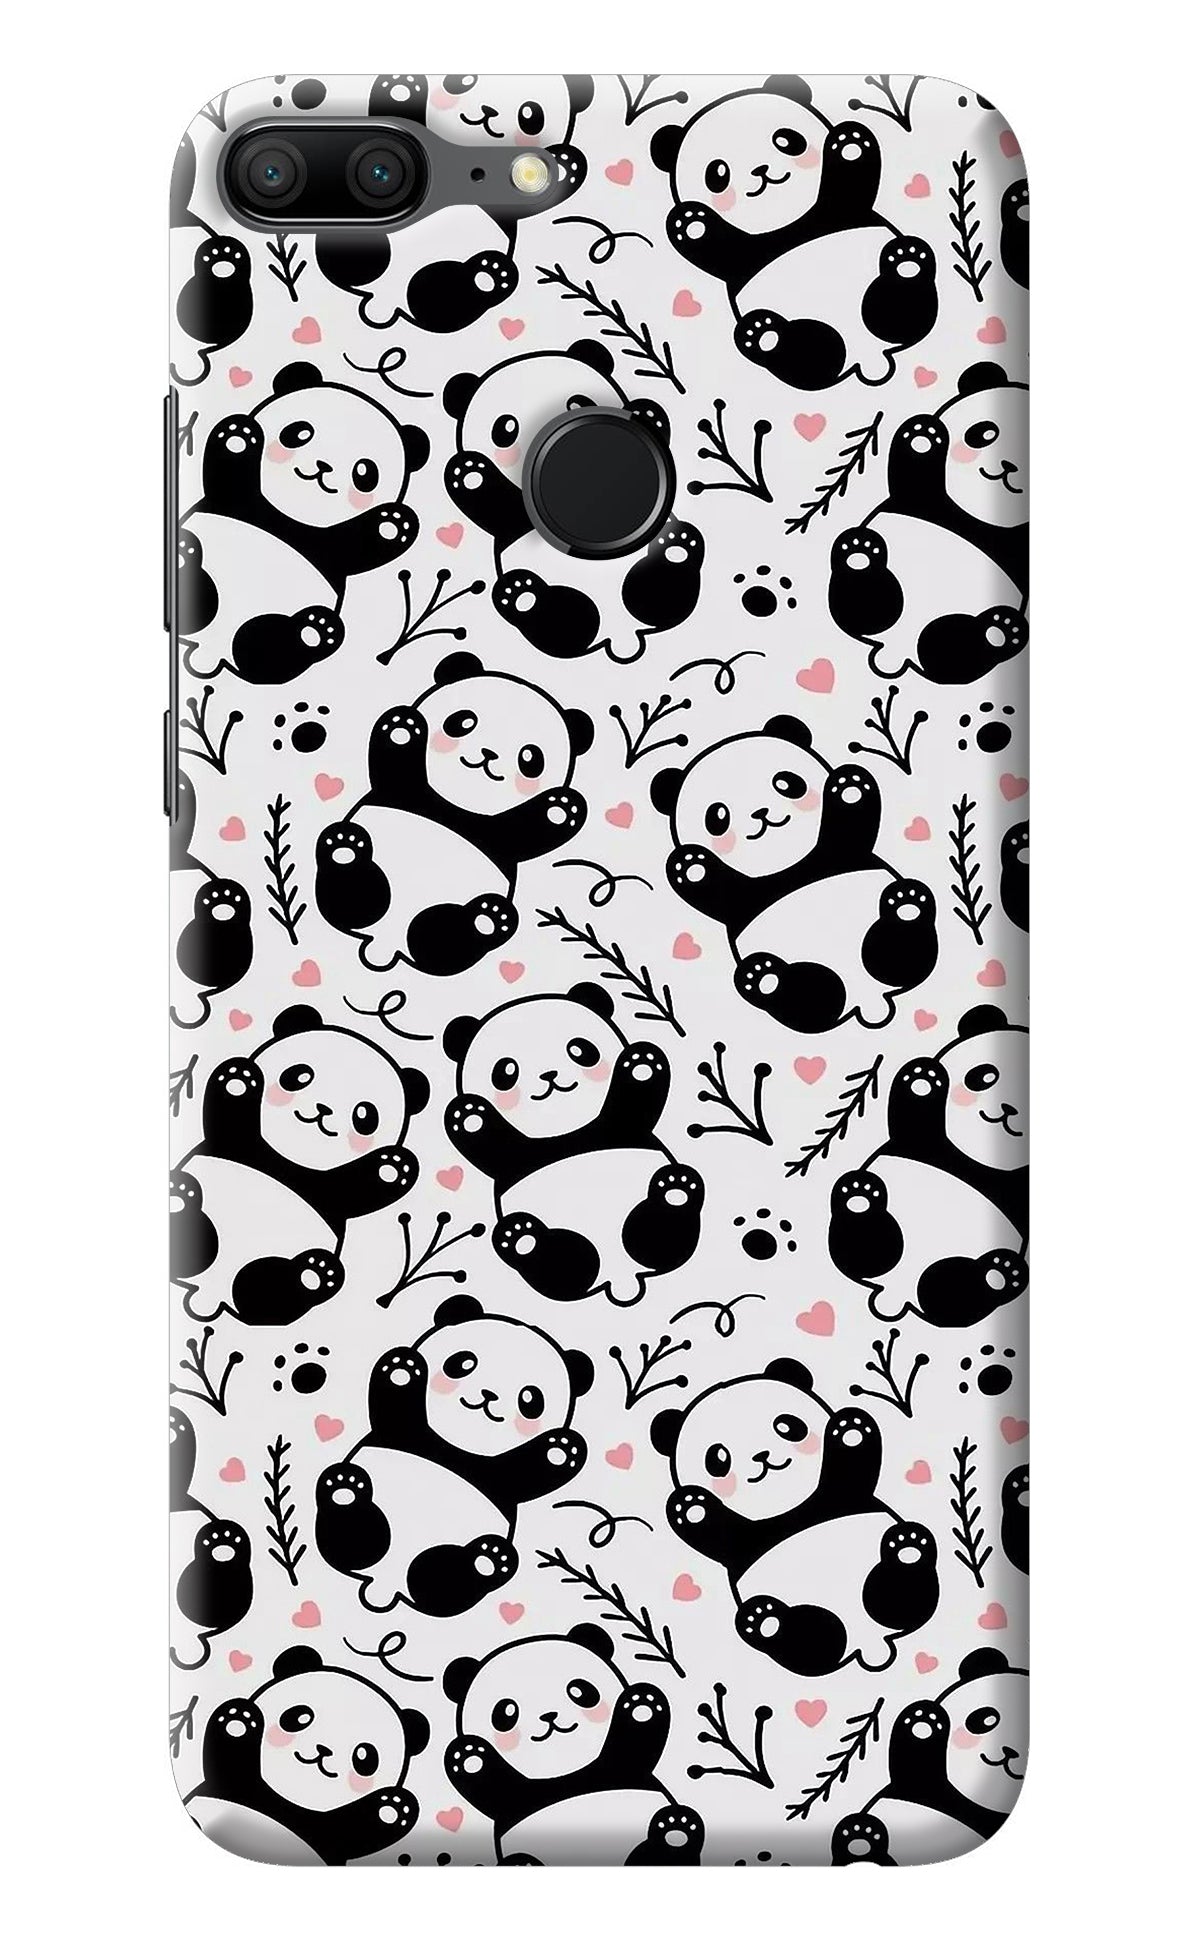 Cute Panda Honor 9 Lite Back Cover